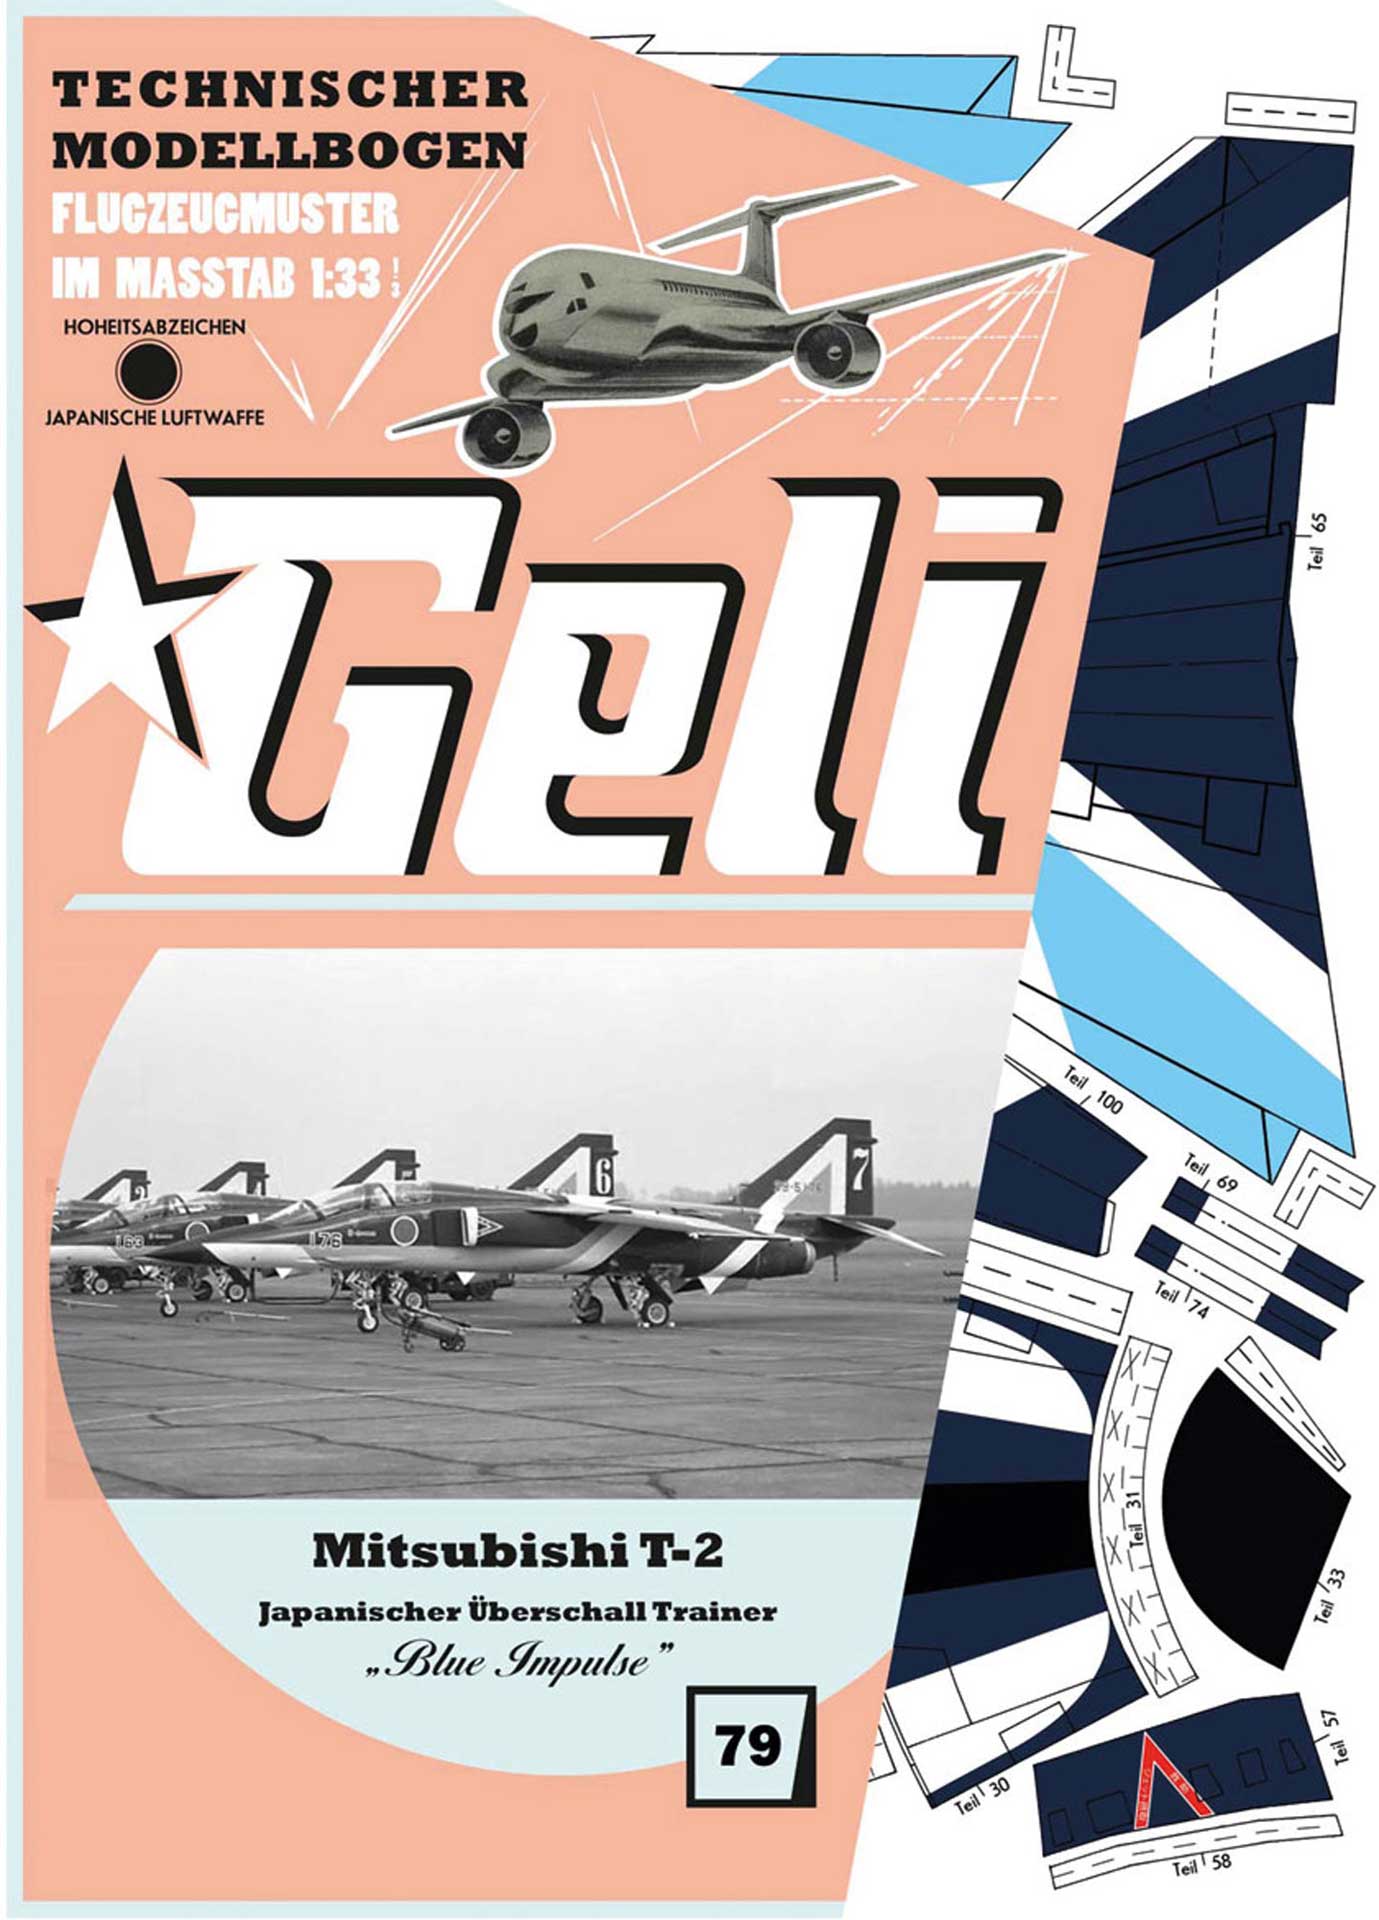 GELI Mitsubishi T-2 # 79 KARTONMODELL